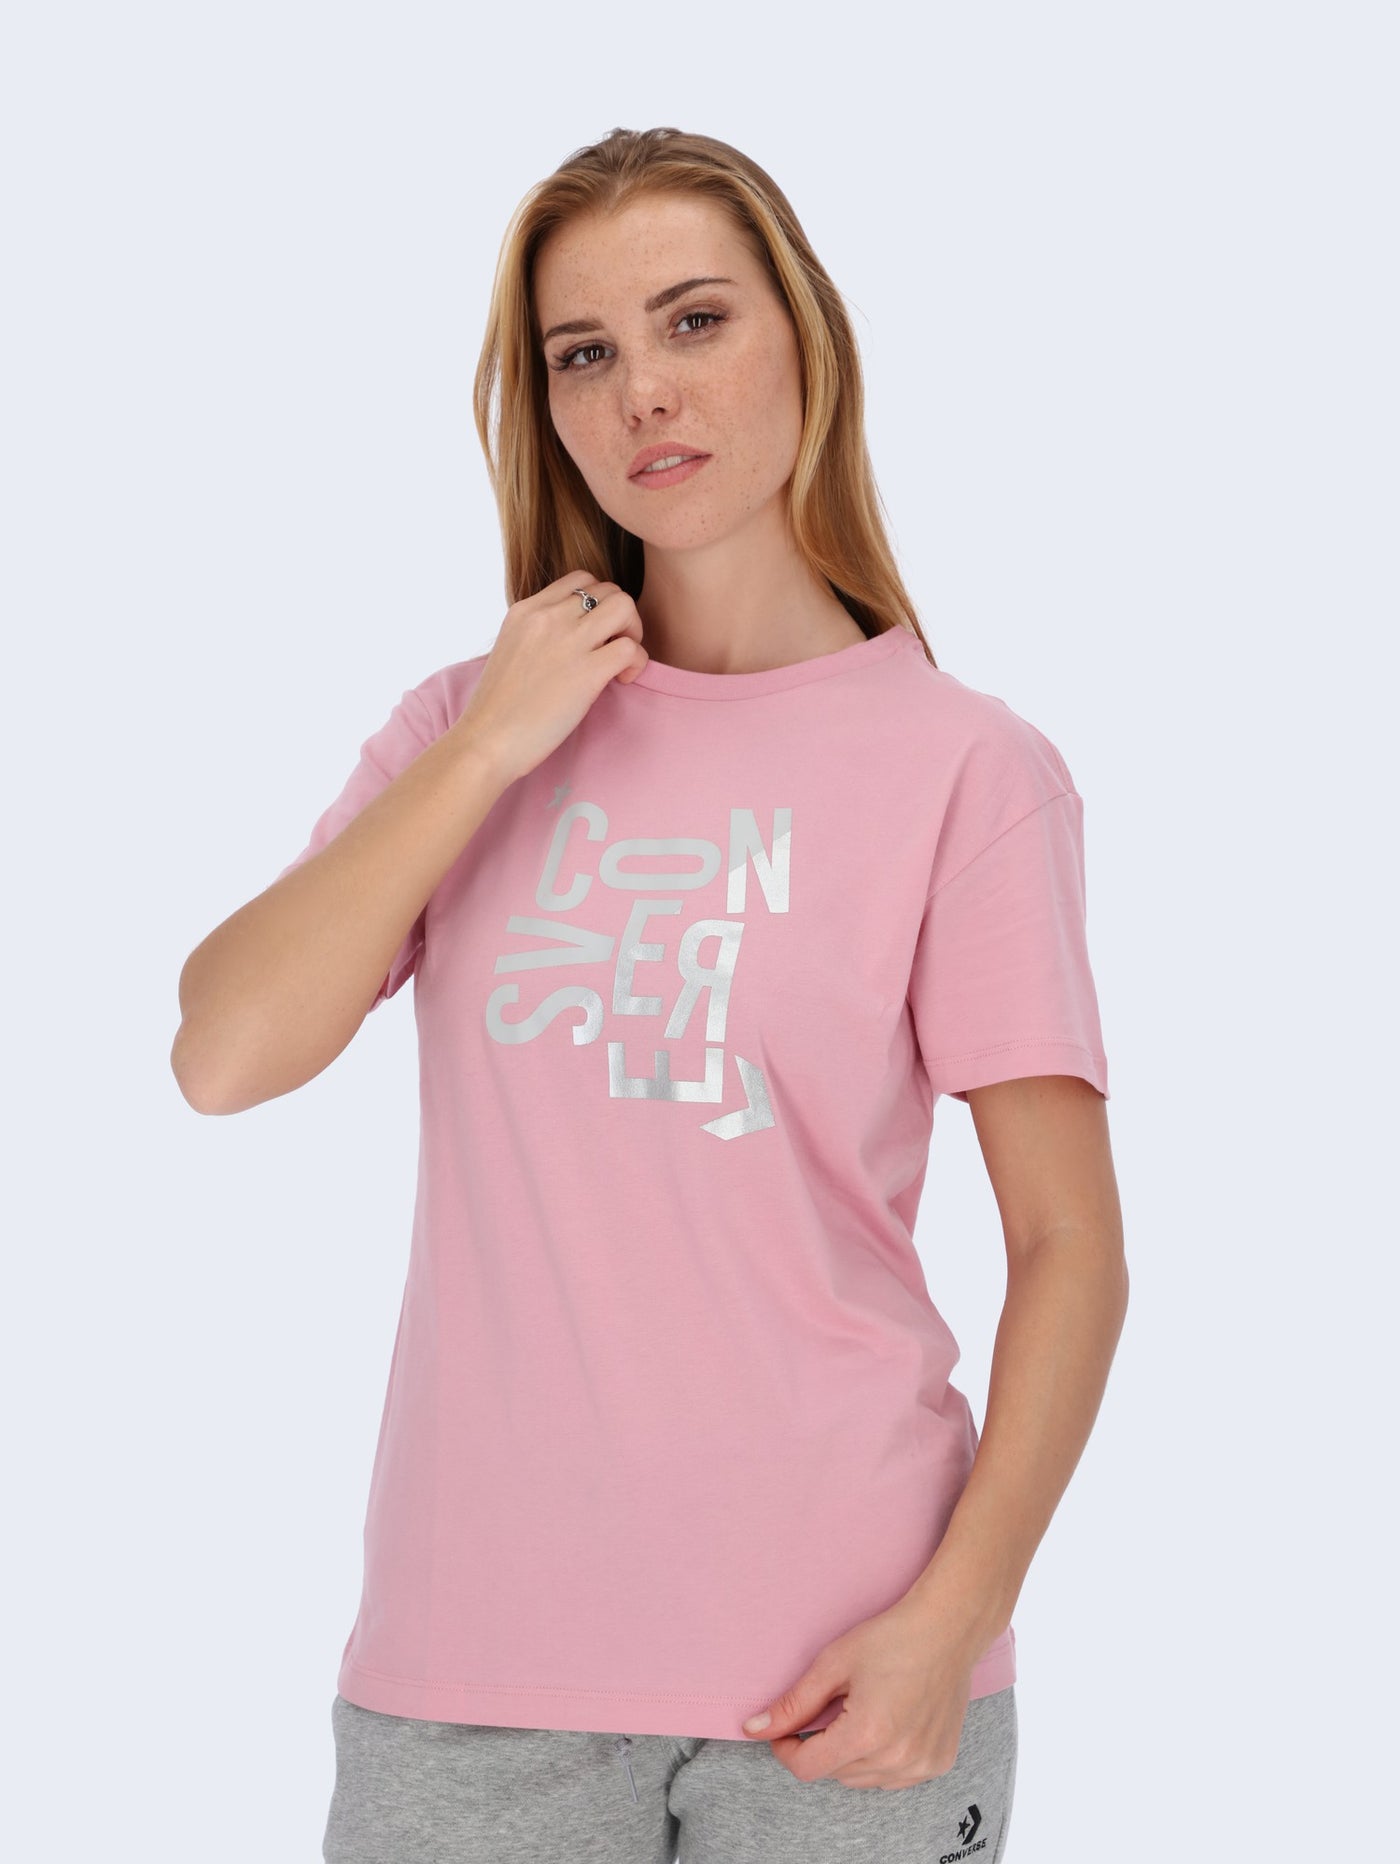 Converse Women's Hacked Logo Graphic T-Shirt - 10020551-a03